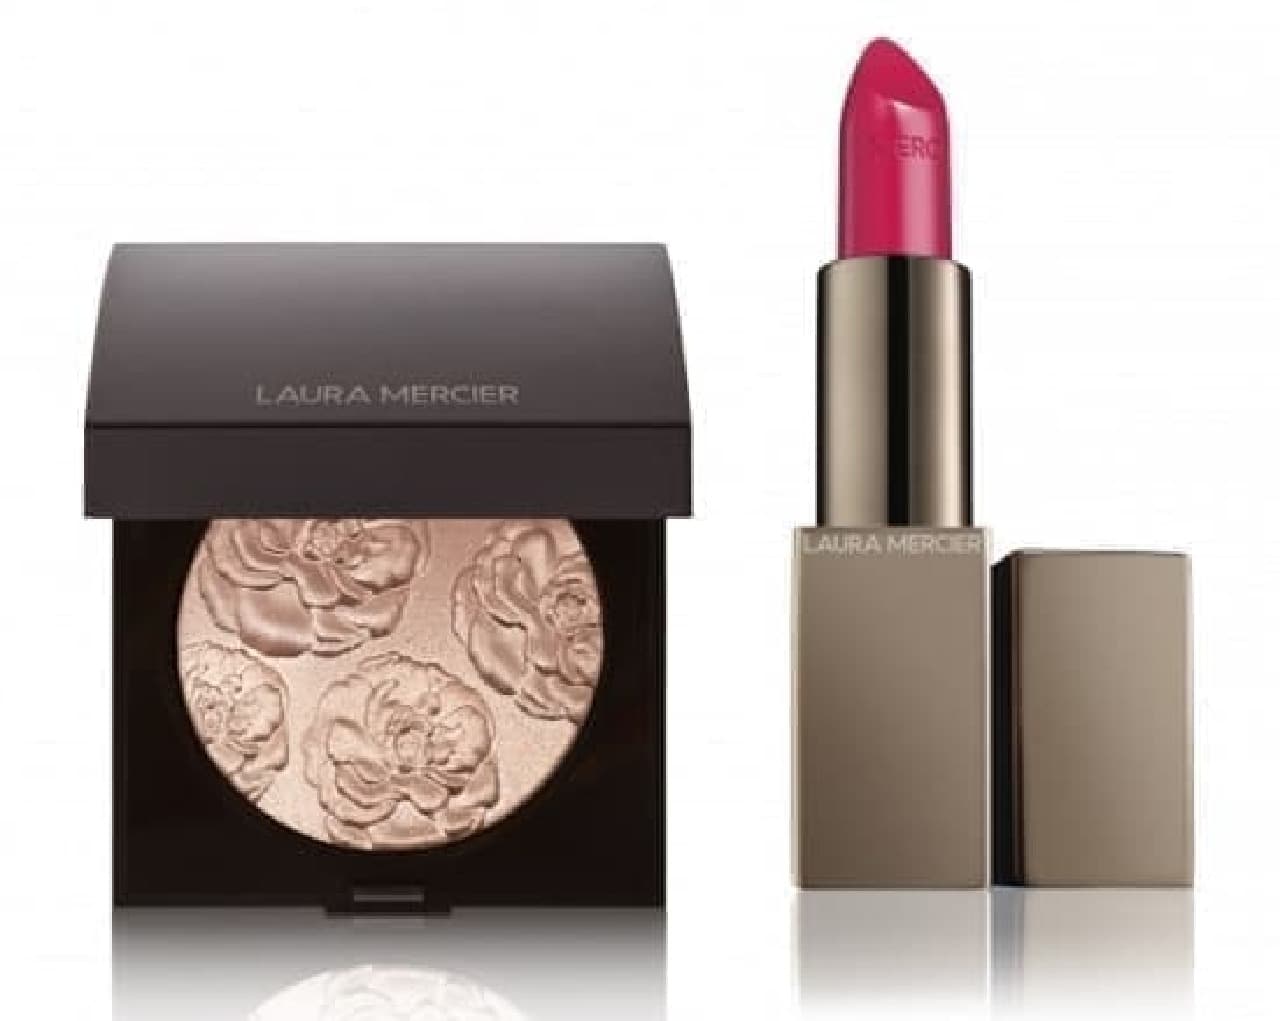 Laura Mercier "Face Illuminator" and "Rouge Essential Silky Cream Lipstick"